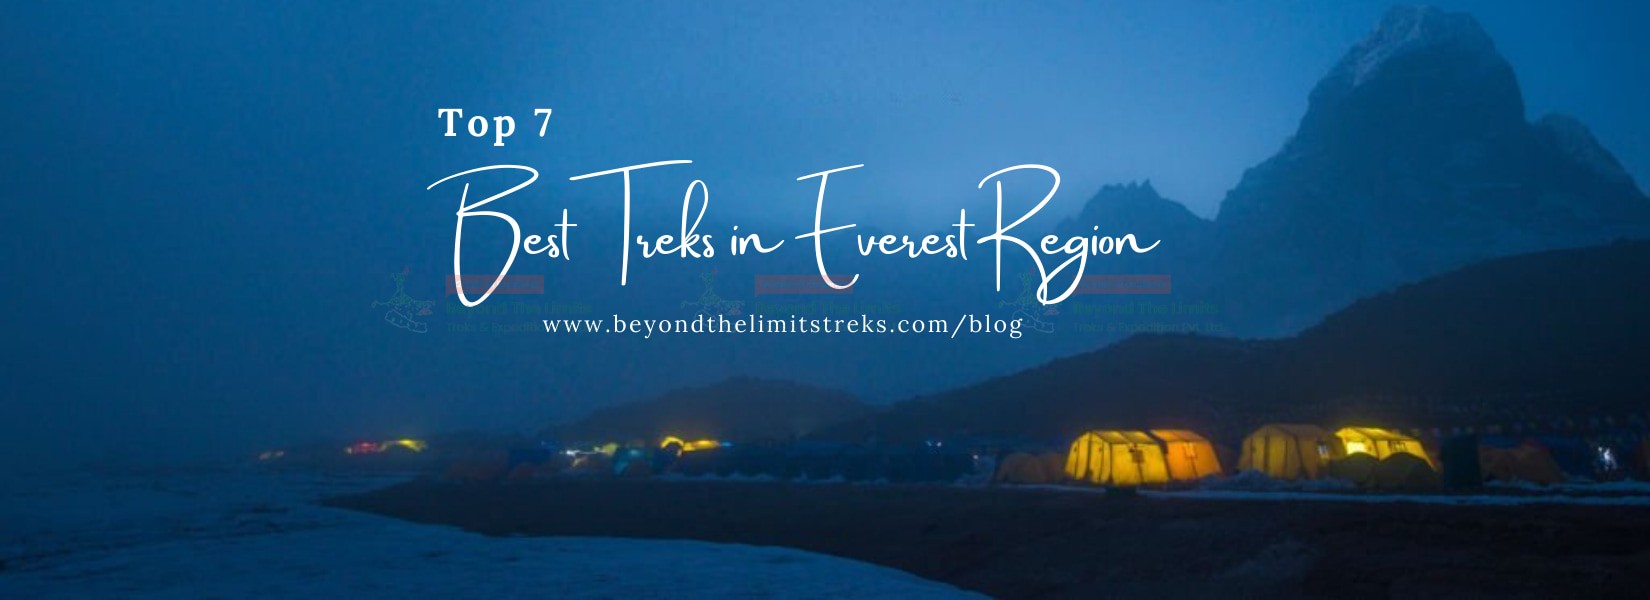 Top 7 Best Treks in Everest Region for 2023